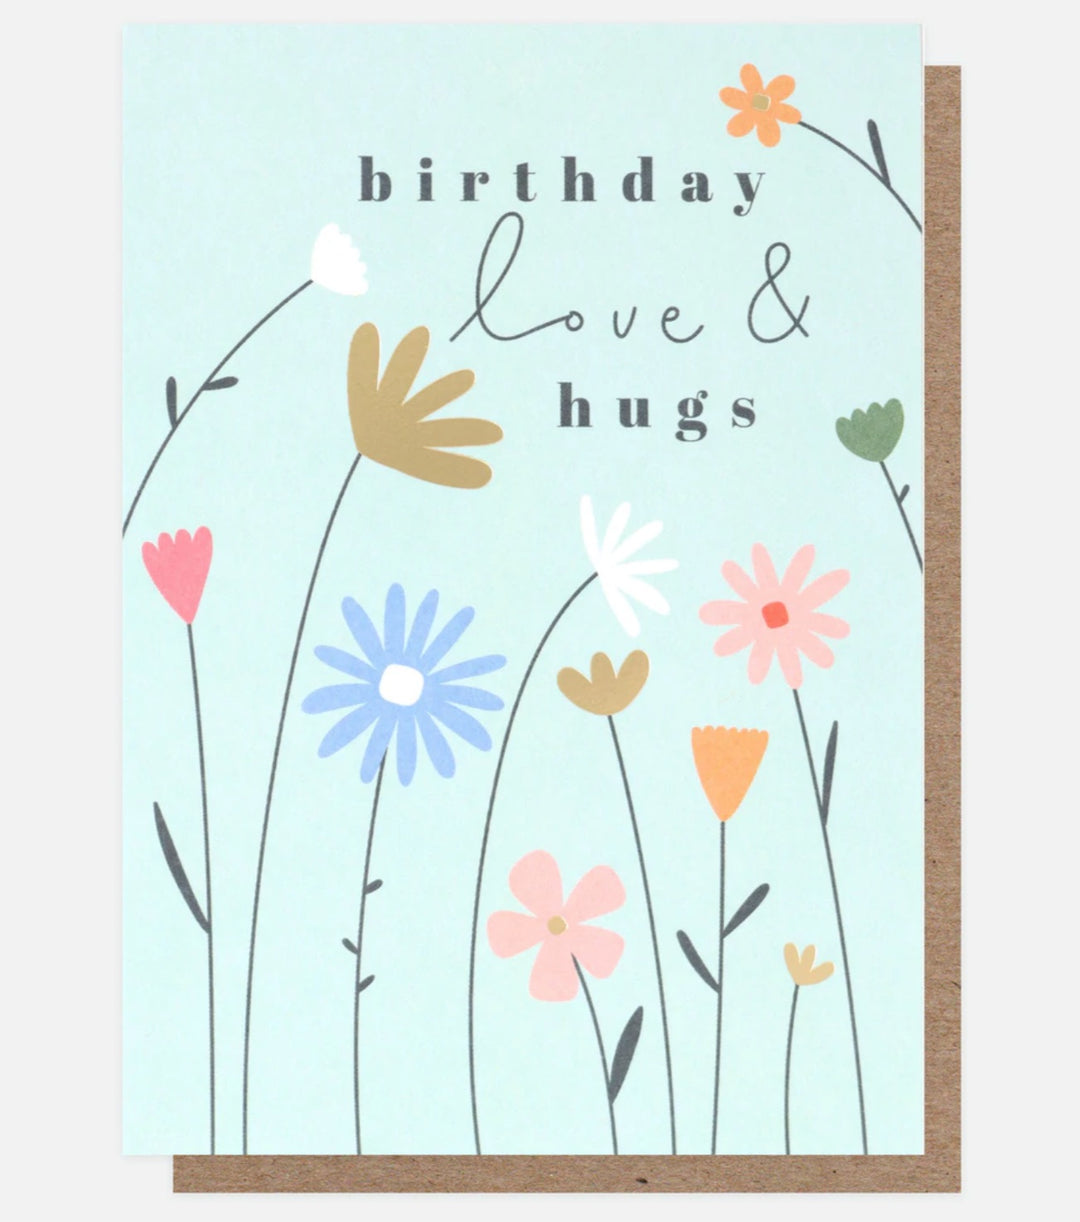 LOVE AND HUGS BIRTHDAY CARD